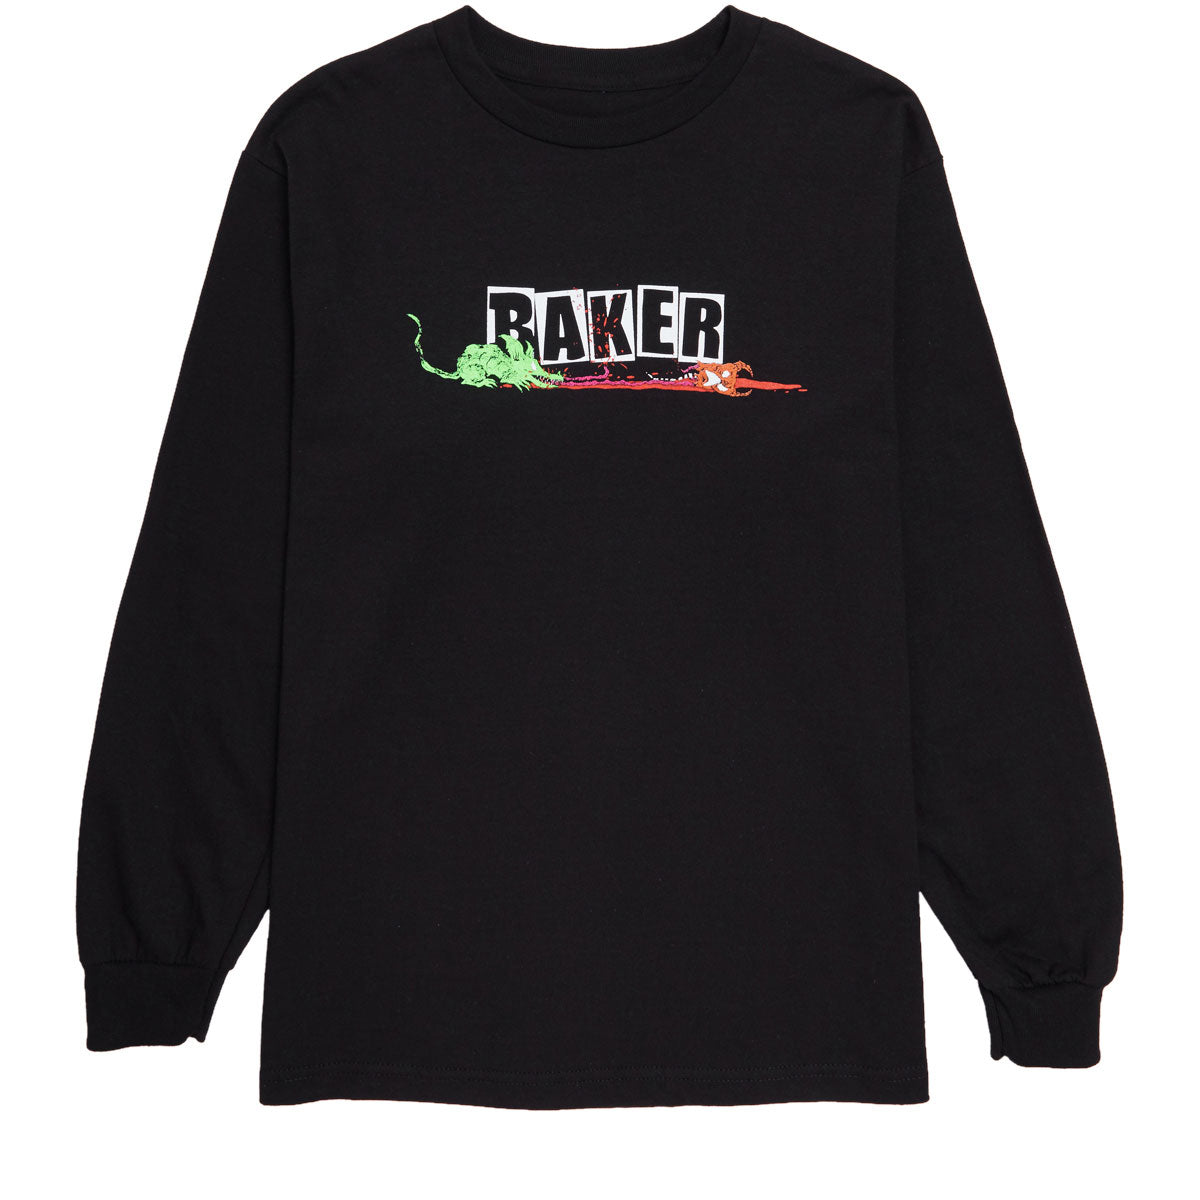 Baker Toxic Rats Long Sleeve T-Shirt - Black image 1